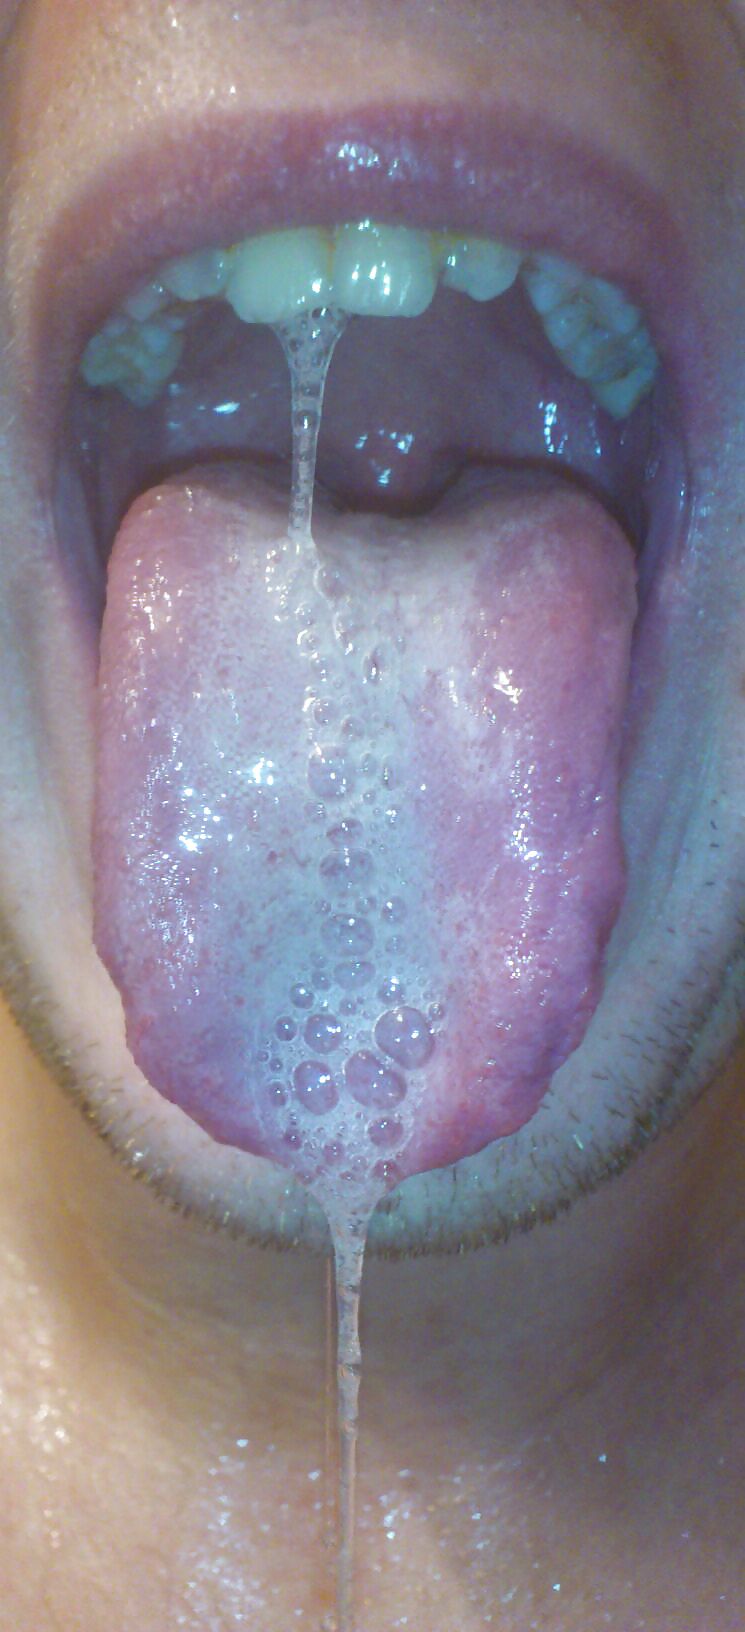 Sexy wet tongue and saliva #11960877